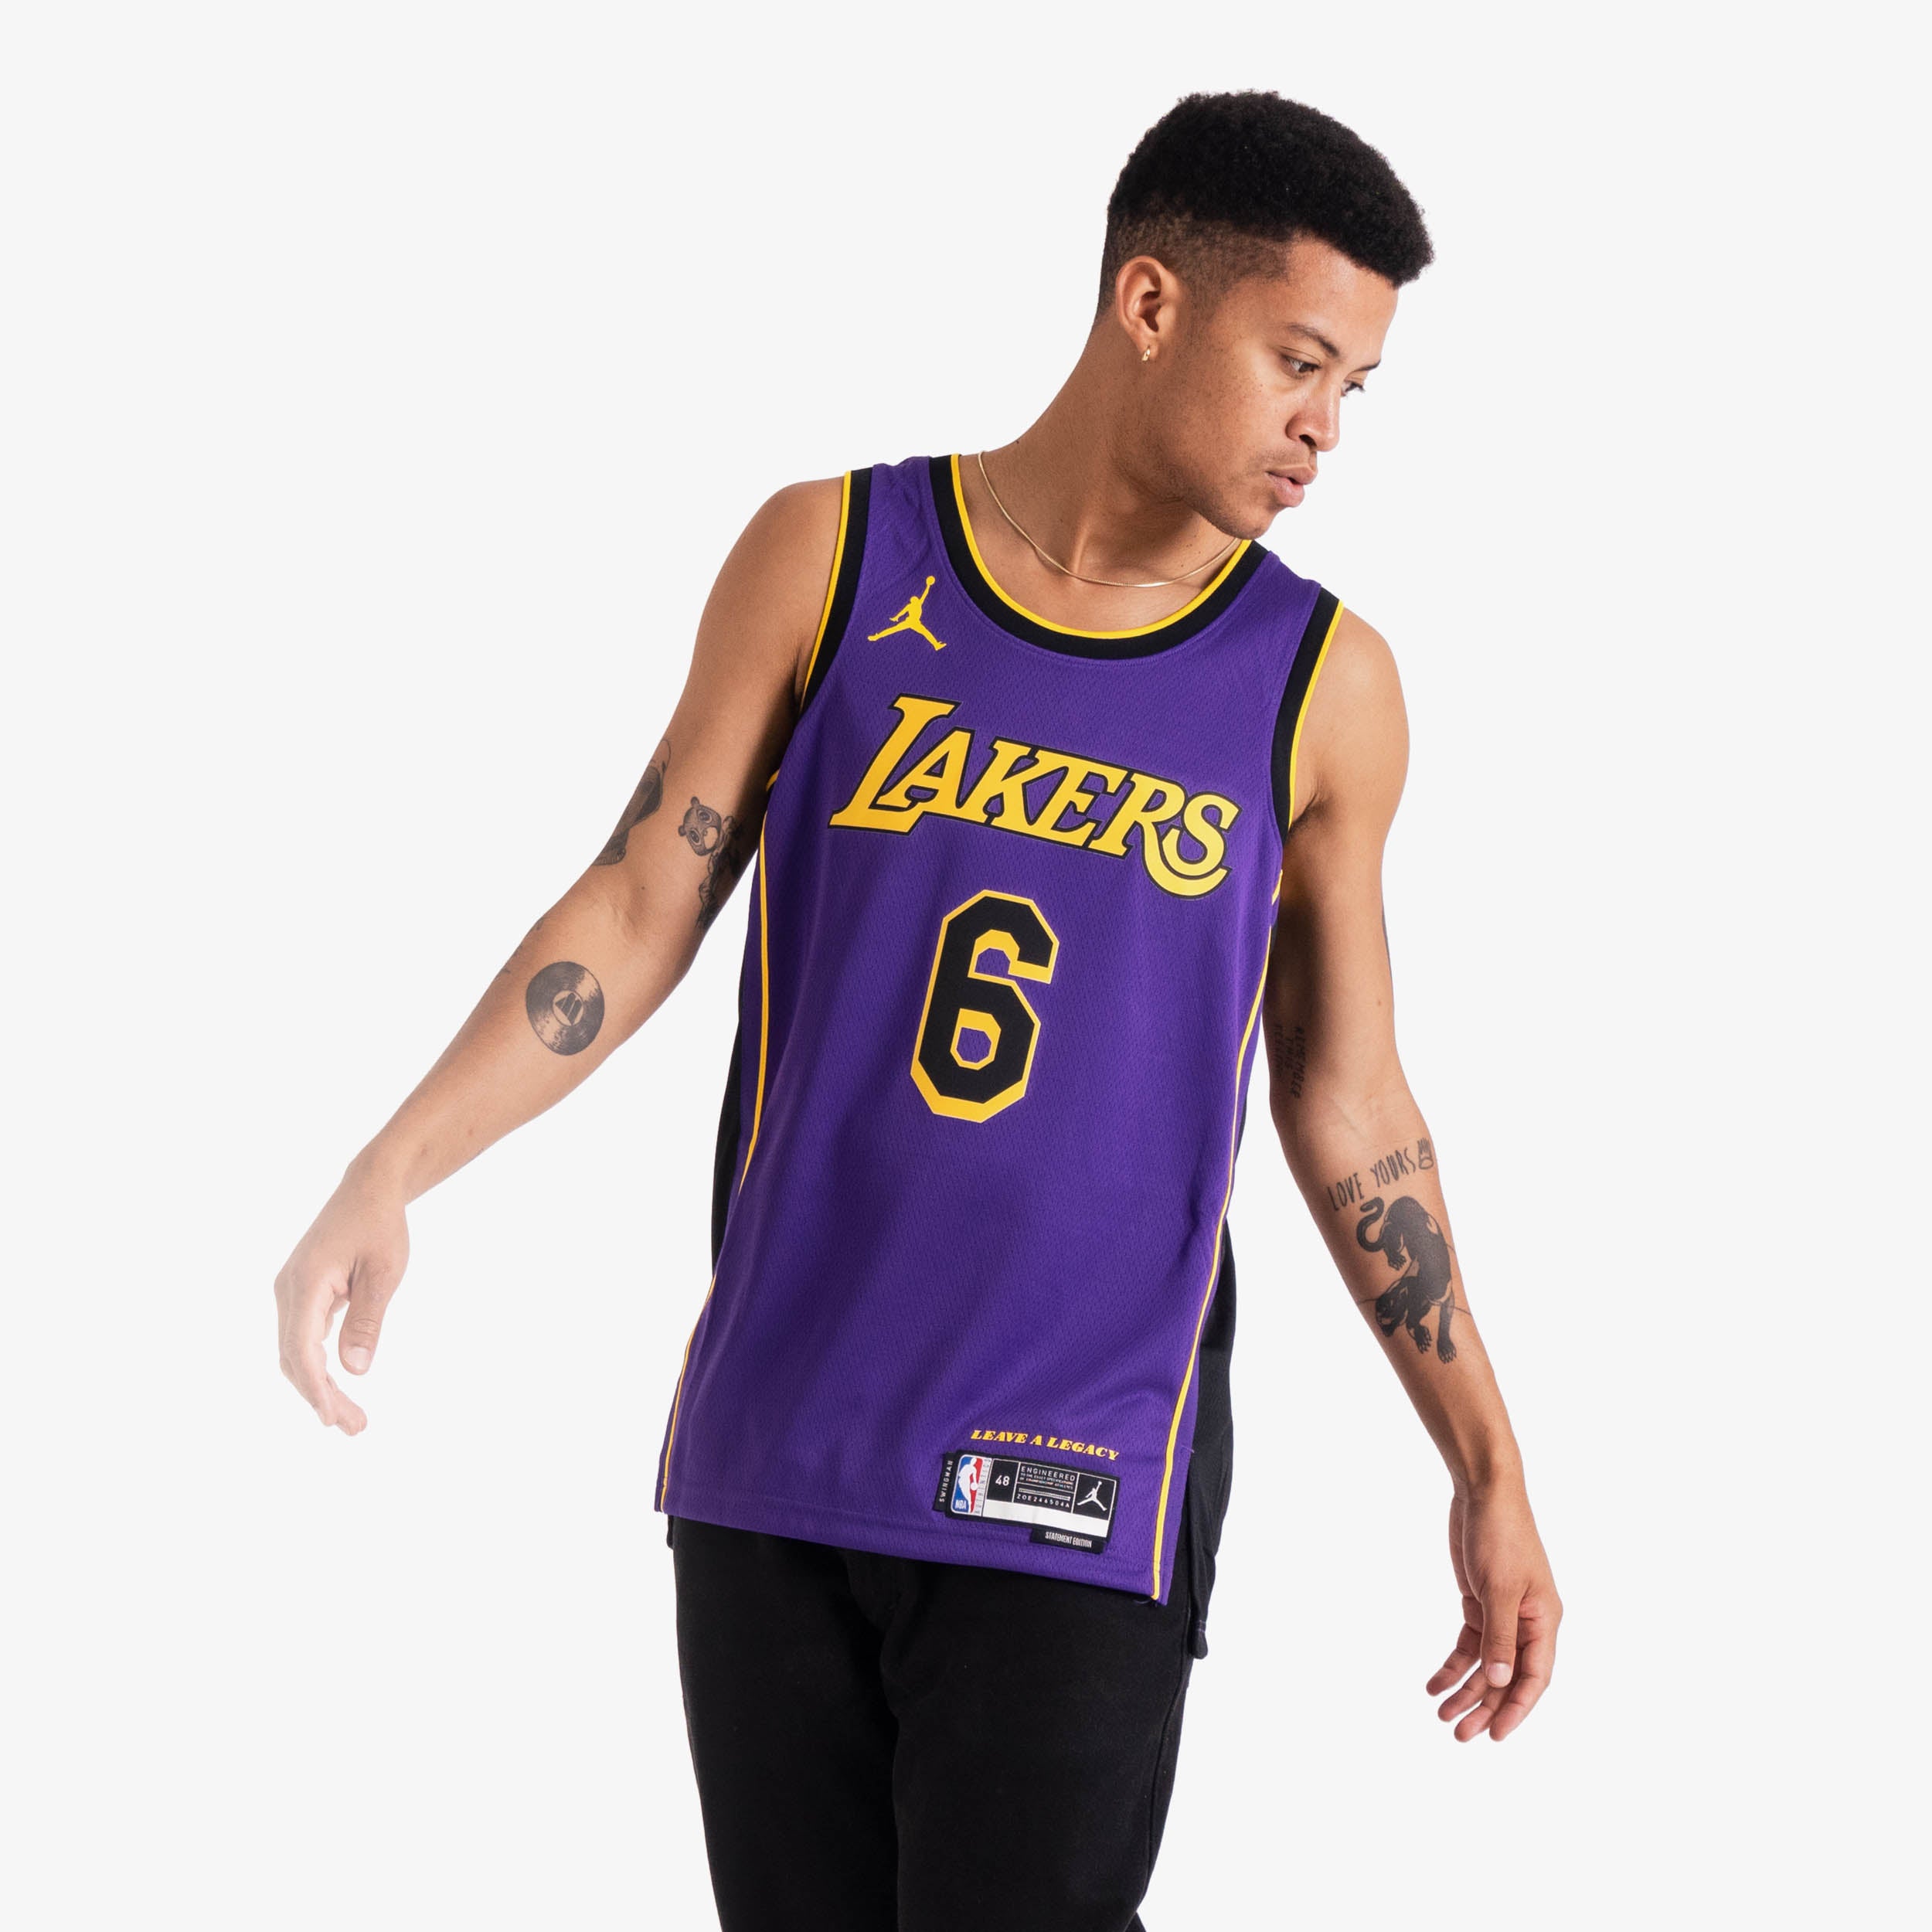 NBA - LeBron James Lakers Earned Edition Jersey, Men's Fashion